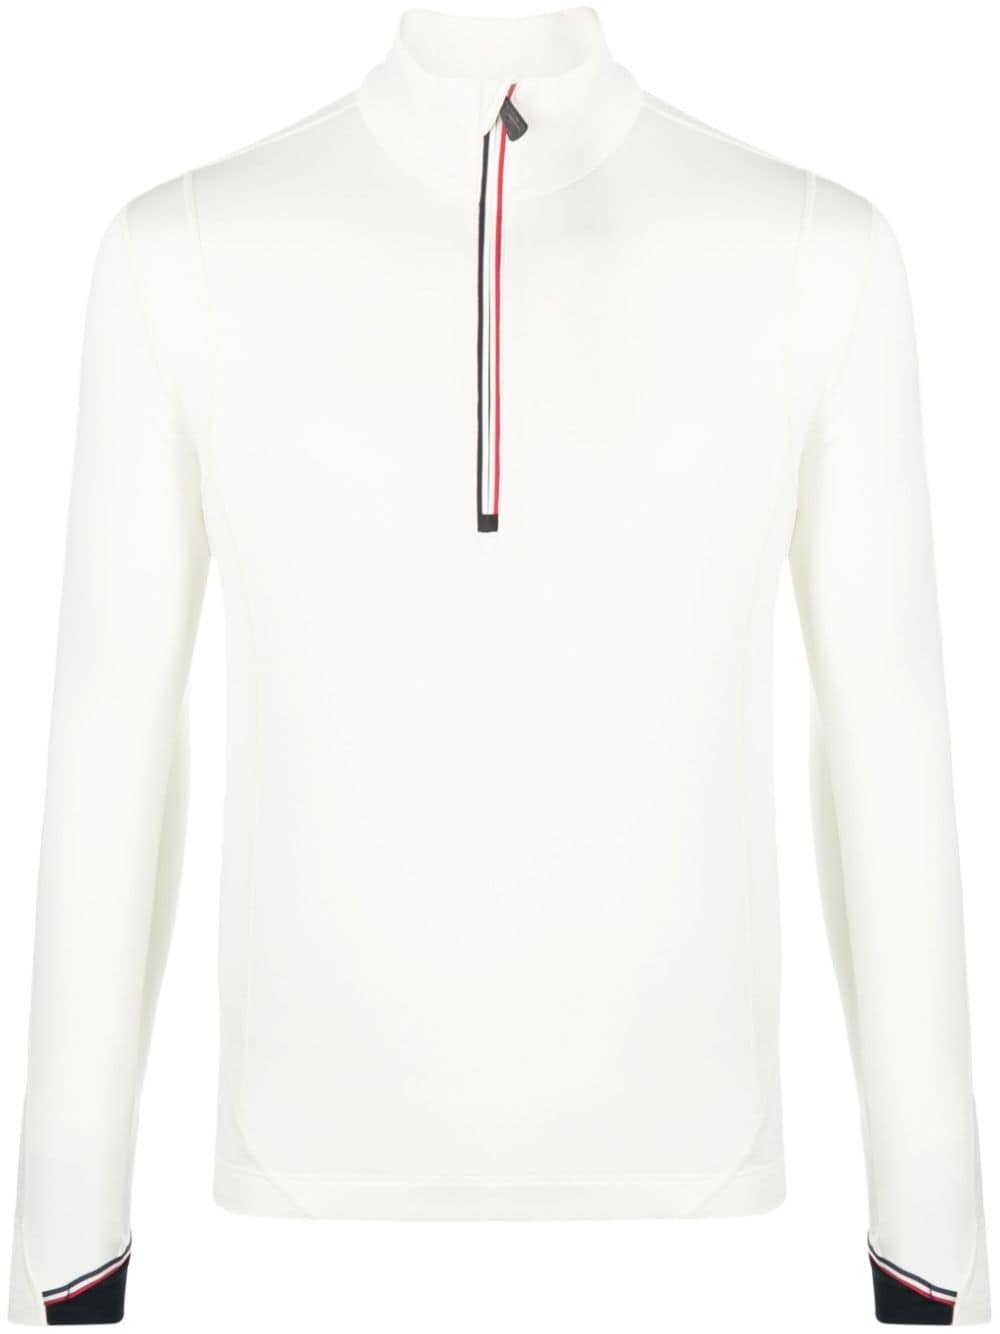 White long sleeves sweatshirt